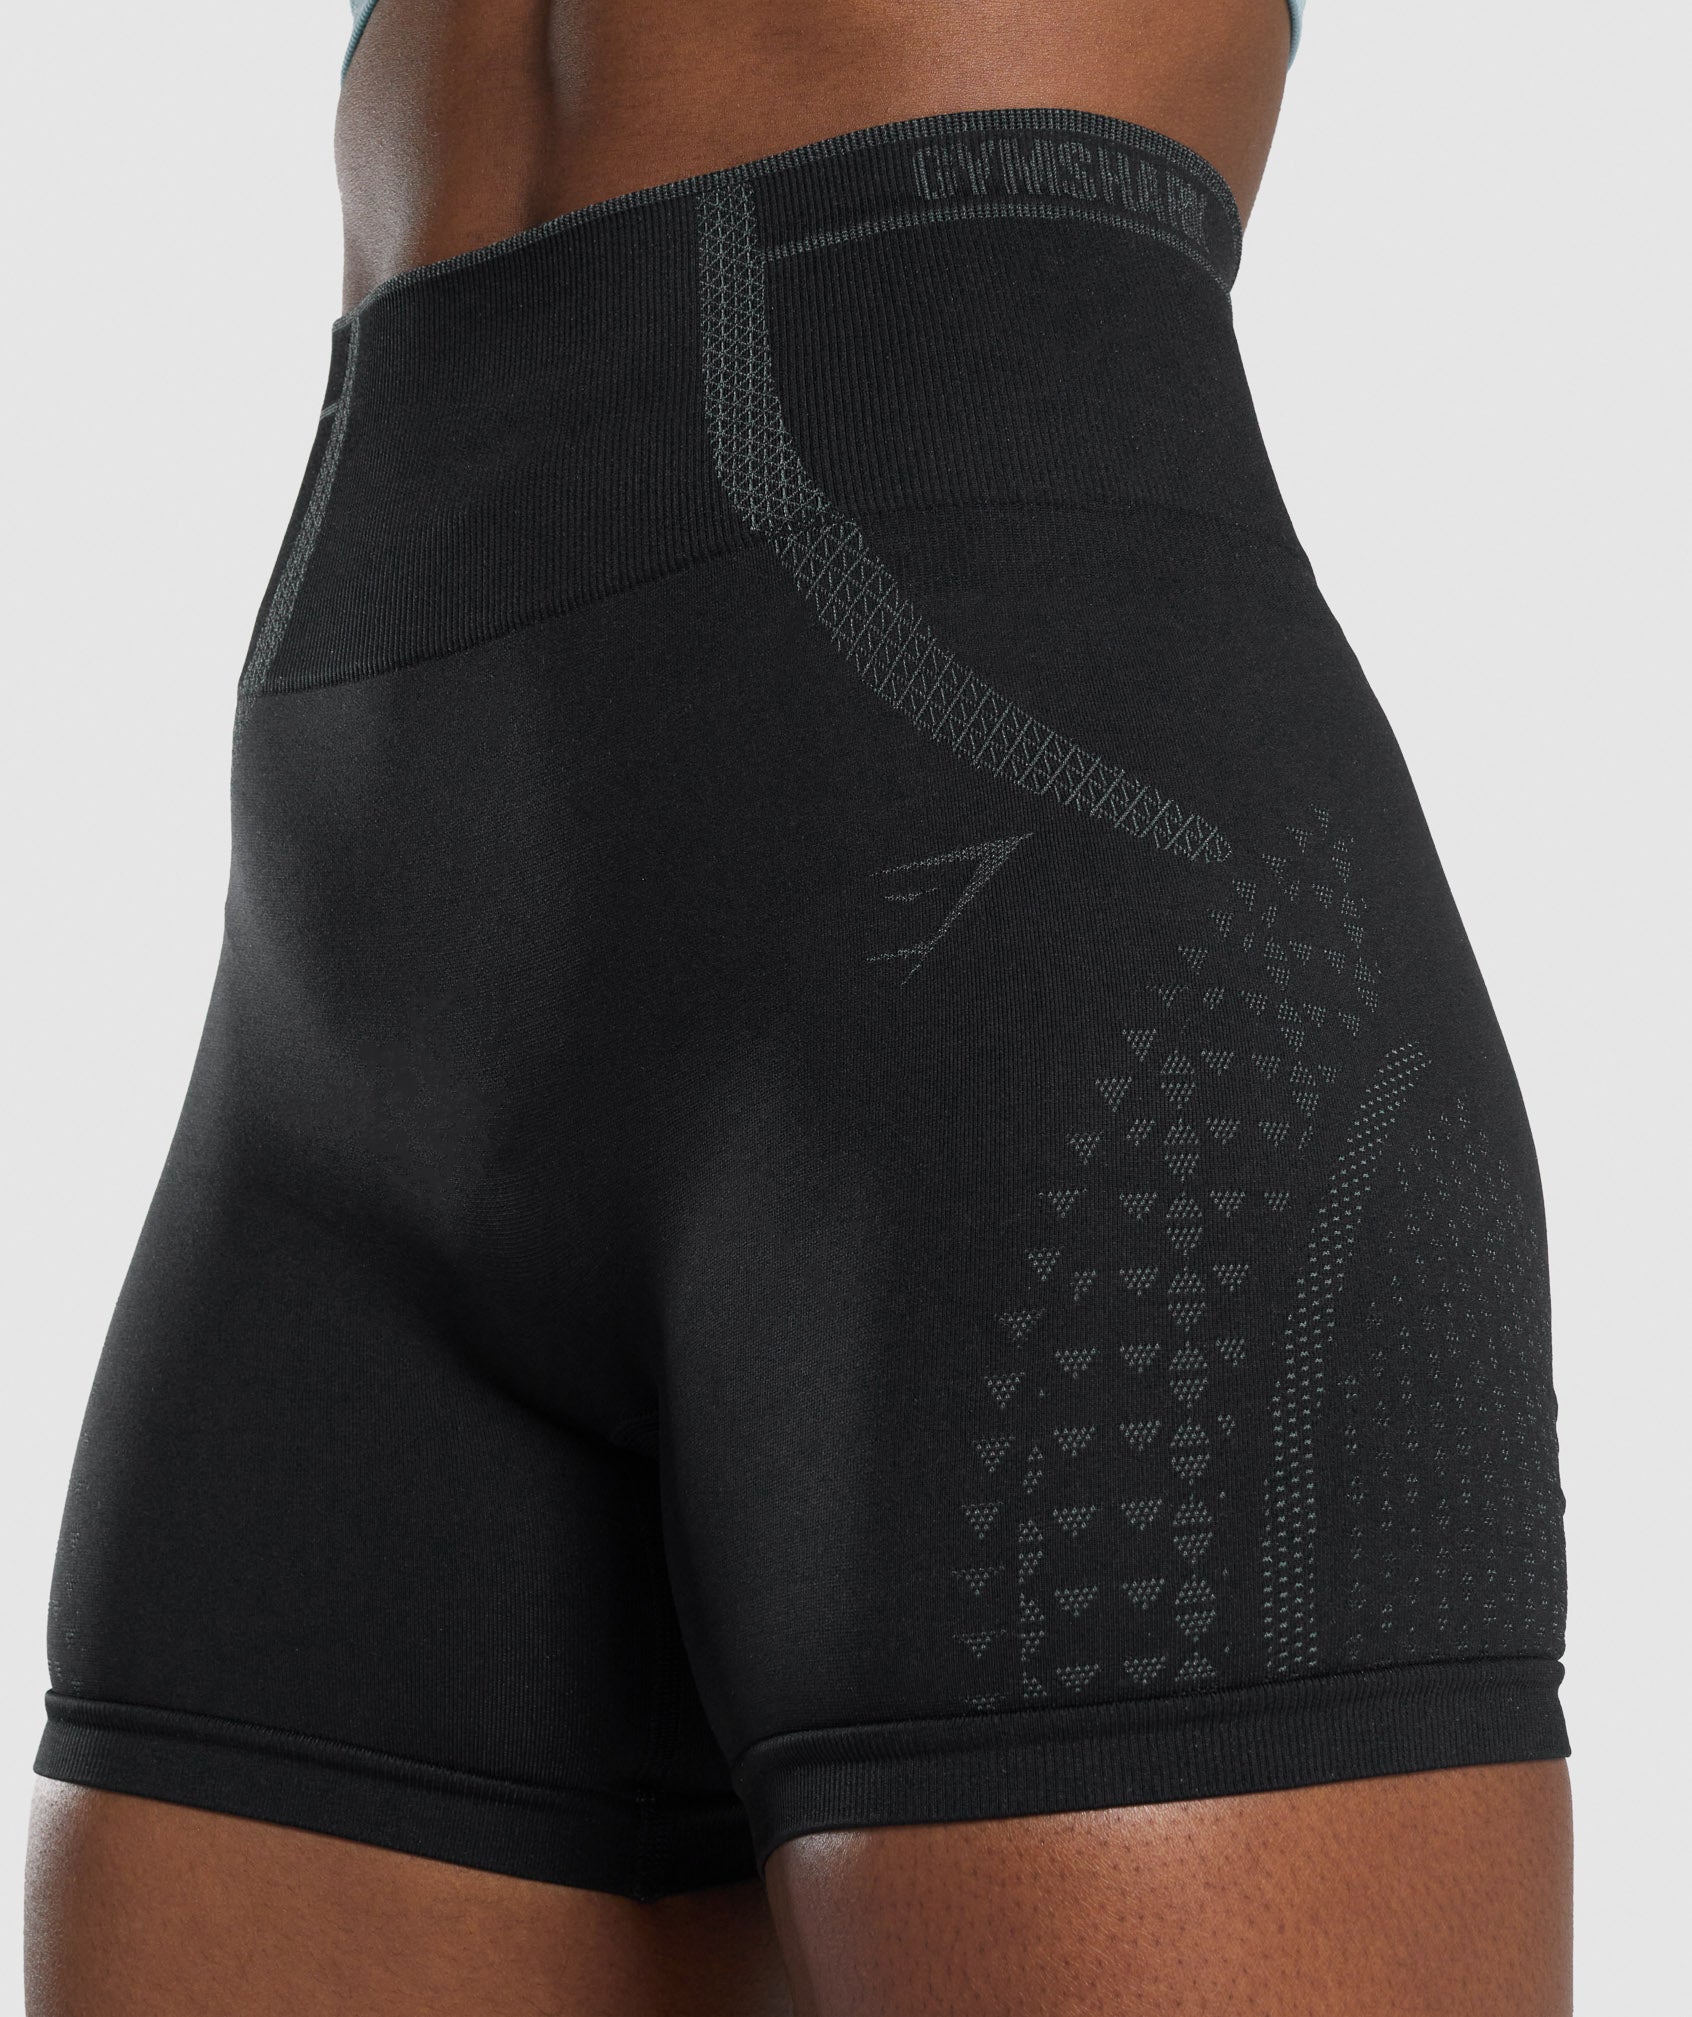 Apex Seamless Shorts in Black/Grey